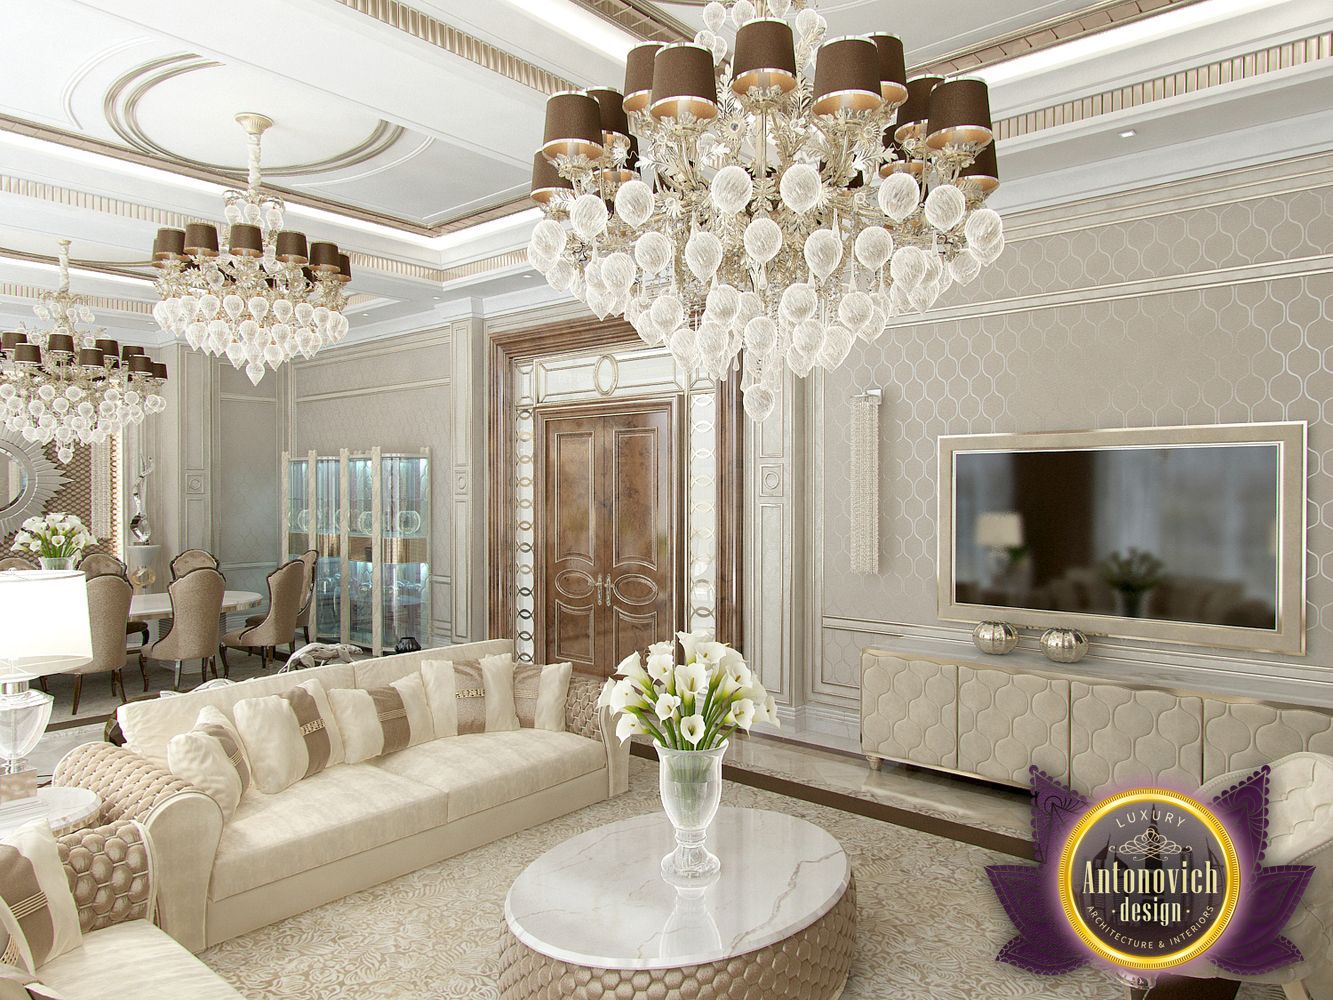 nigeiradesign: Best house designs from Luxury Antonovich Design